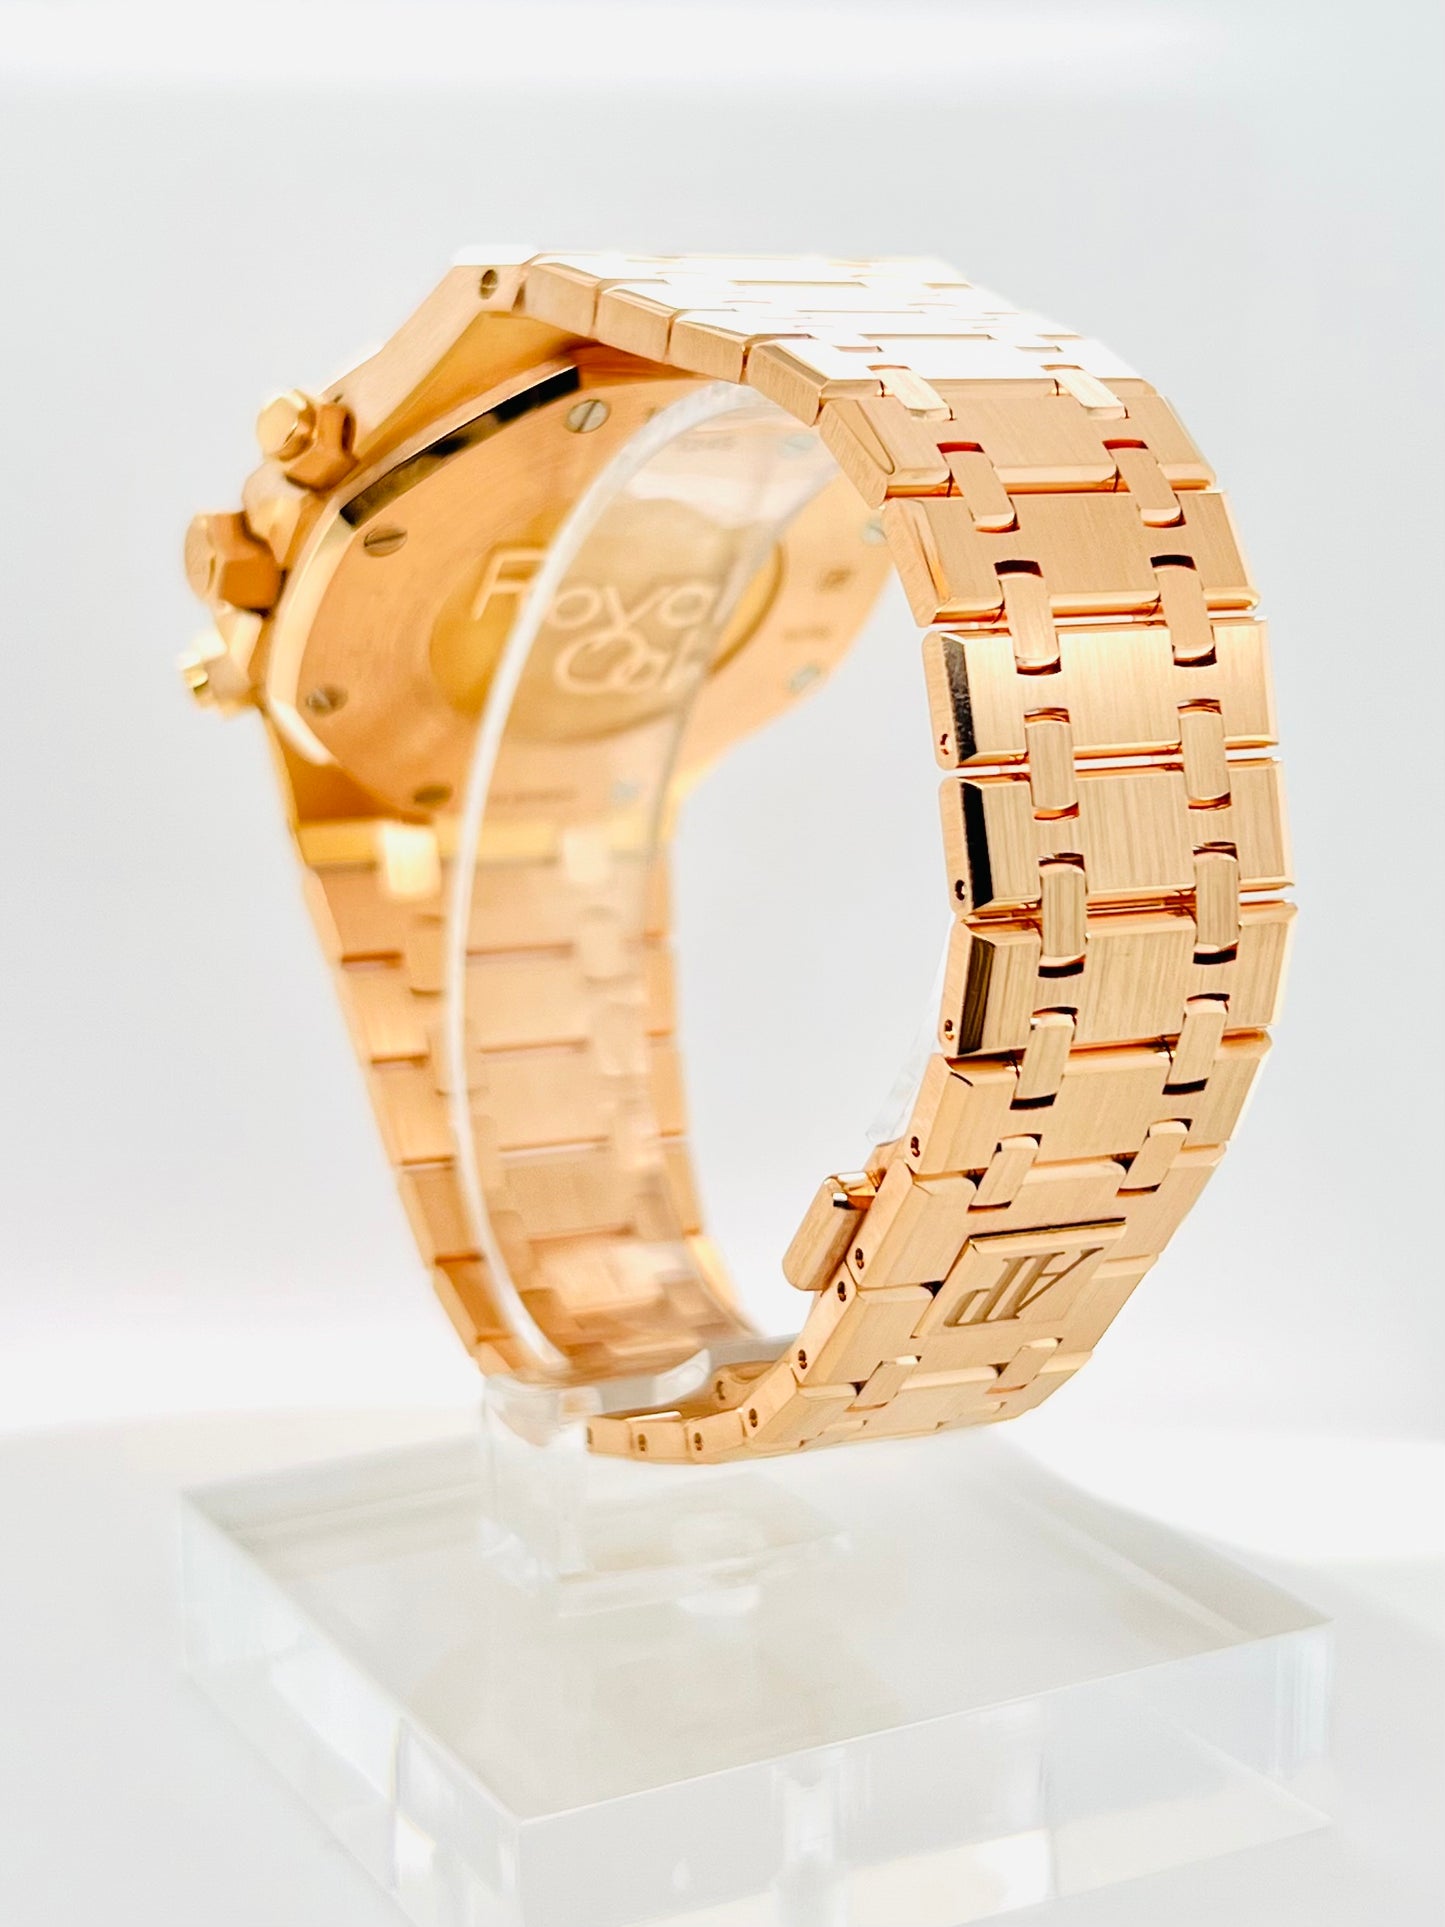 Audemars Piguet Royal Oak Chronograph 41mm Rose Gold Men's Luxury Watch Model #26320OR.00.D088CR.01